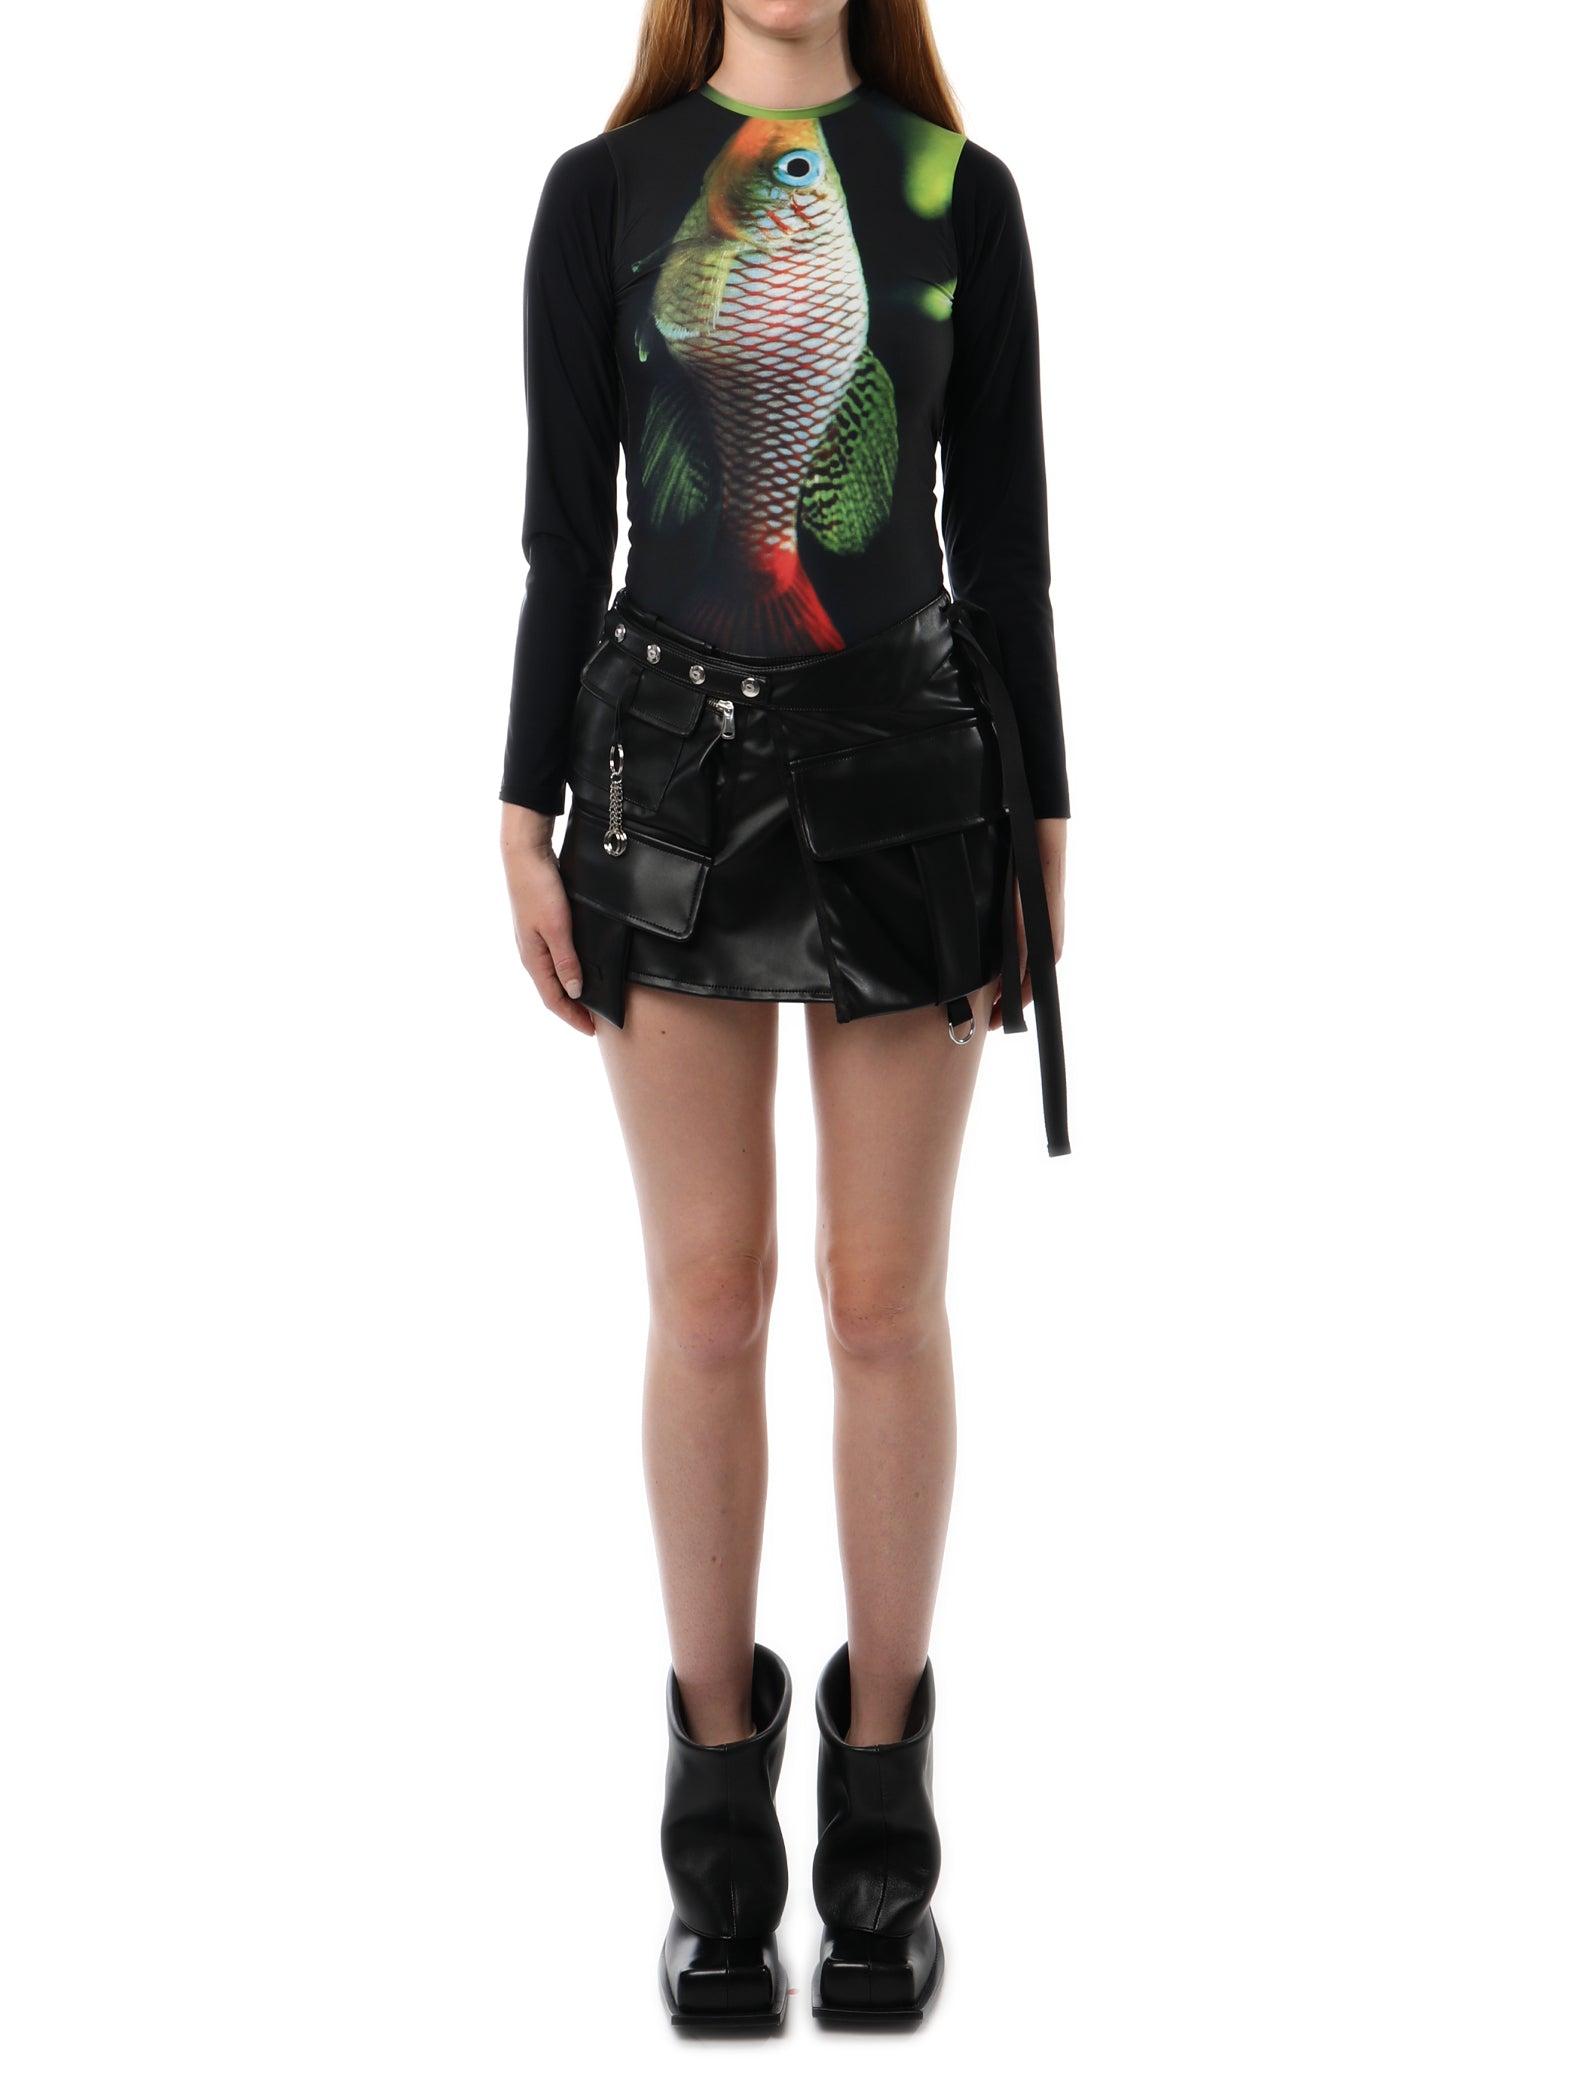 BOTTER Fish Print Bodysuit in Black | Lyst